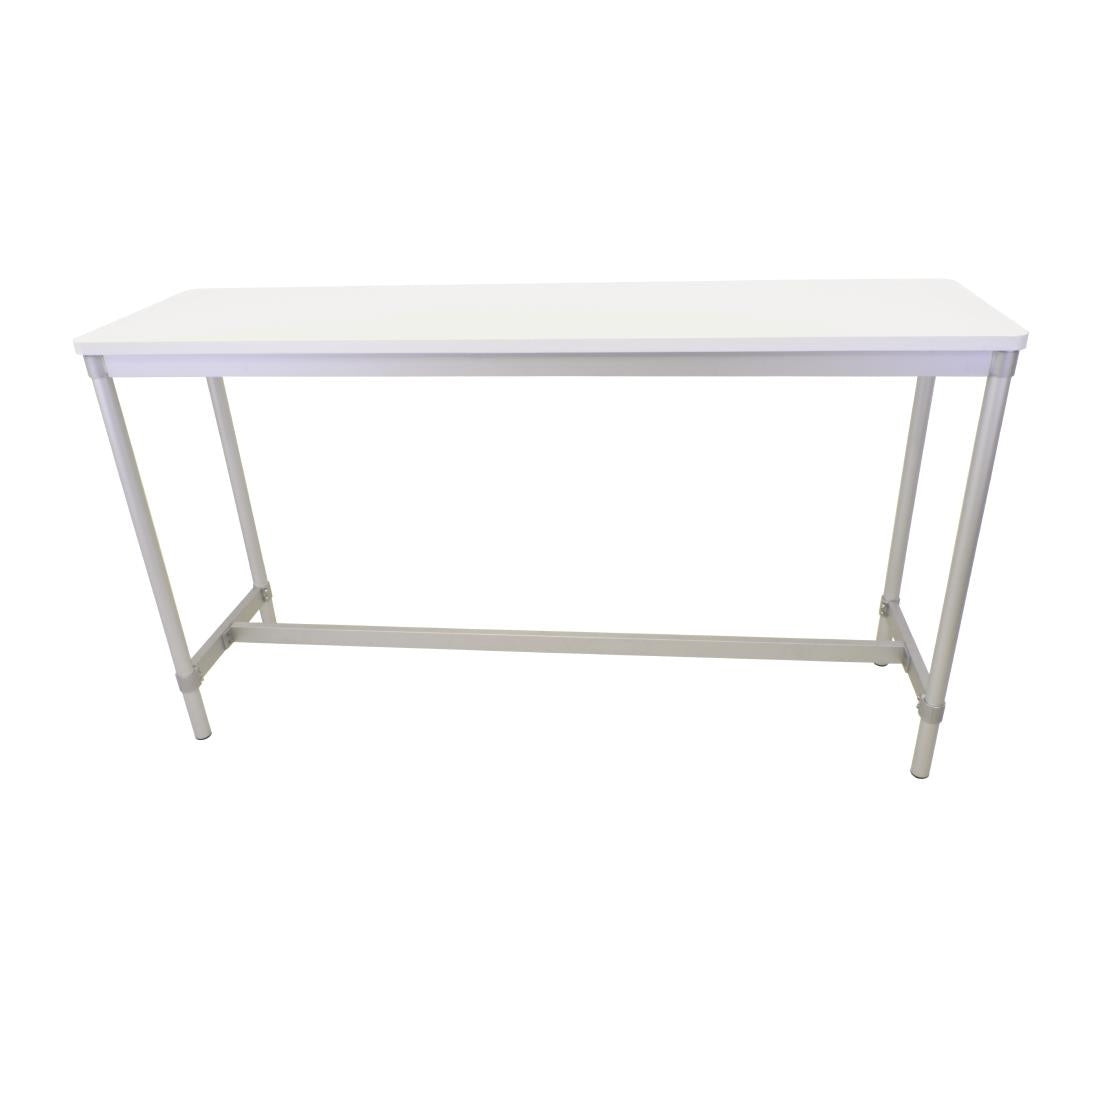 DG130-WH Gopak Enviro Indoor White Rectangle Poseur Table 1800mm JD Catering Equipment Solutions Ltd